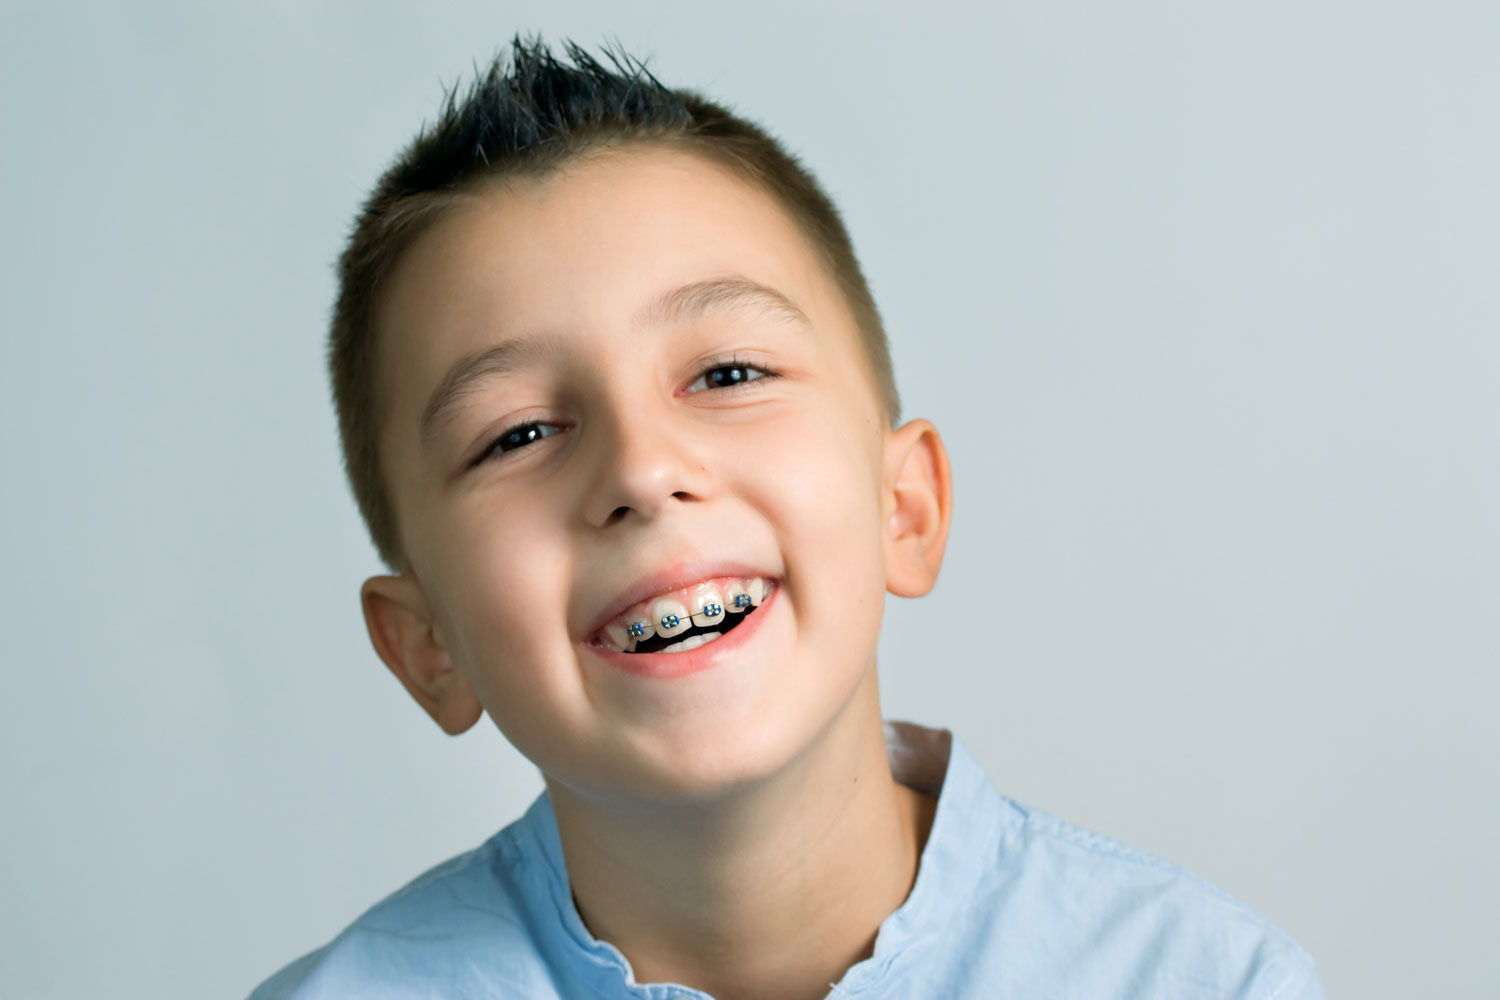 Ortodoncia para niños: Ortopedia